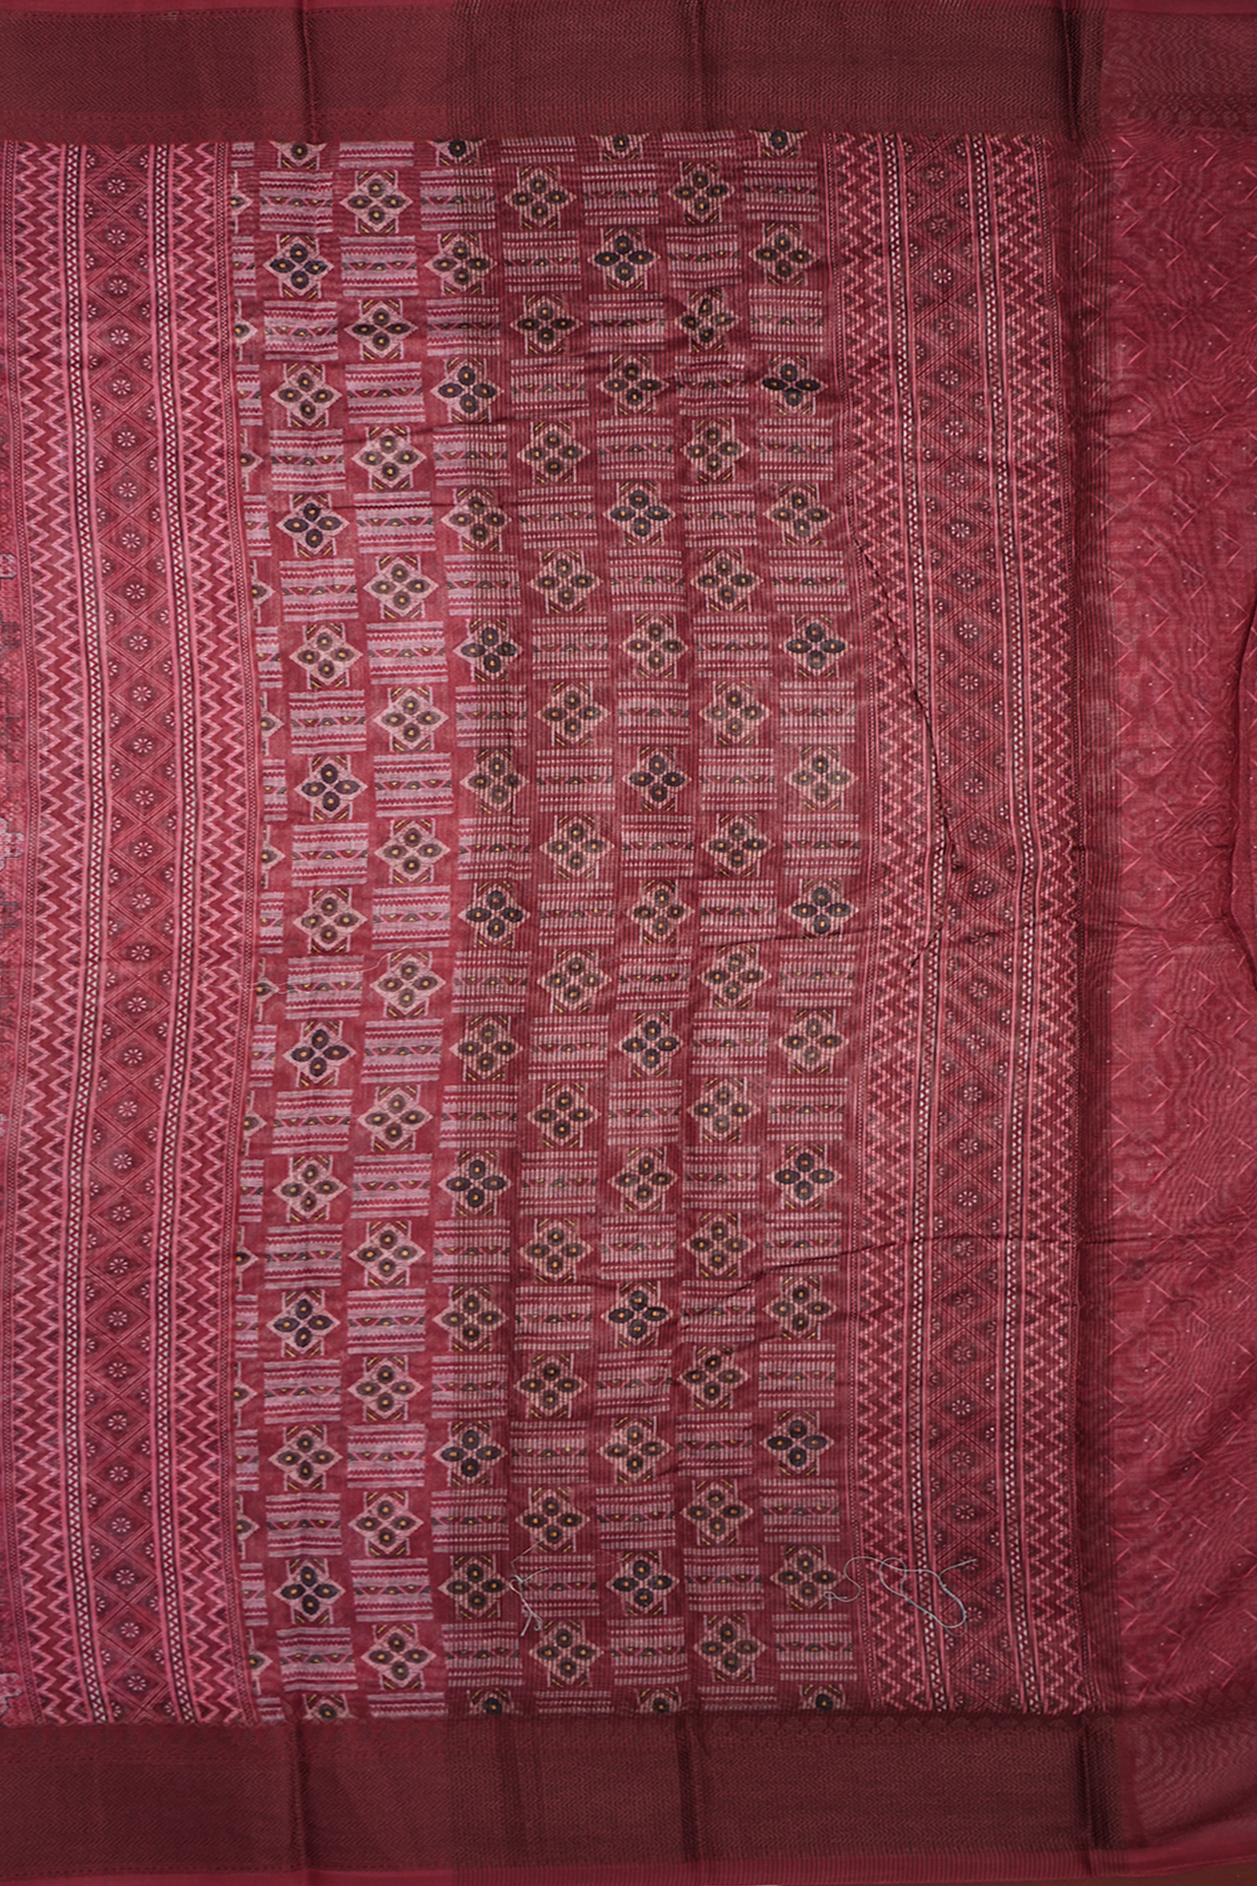 Allover Printed Design Shades Of Red Chanderi Cotton Saree